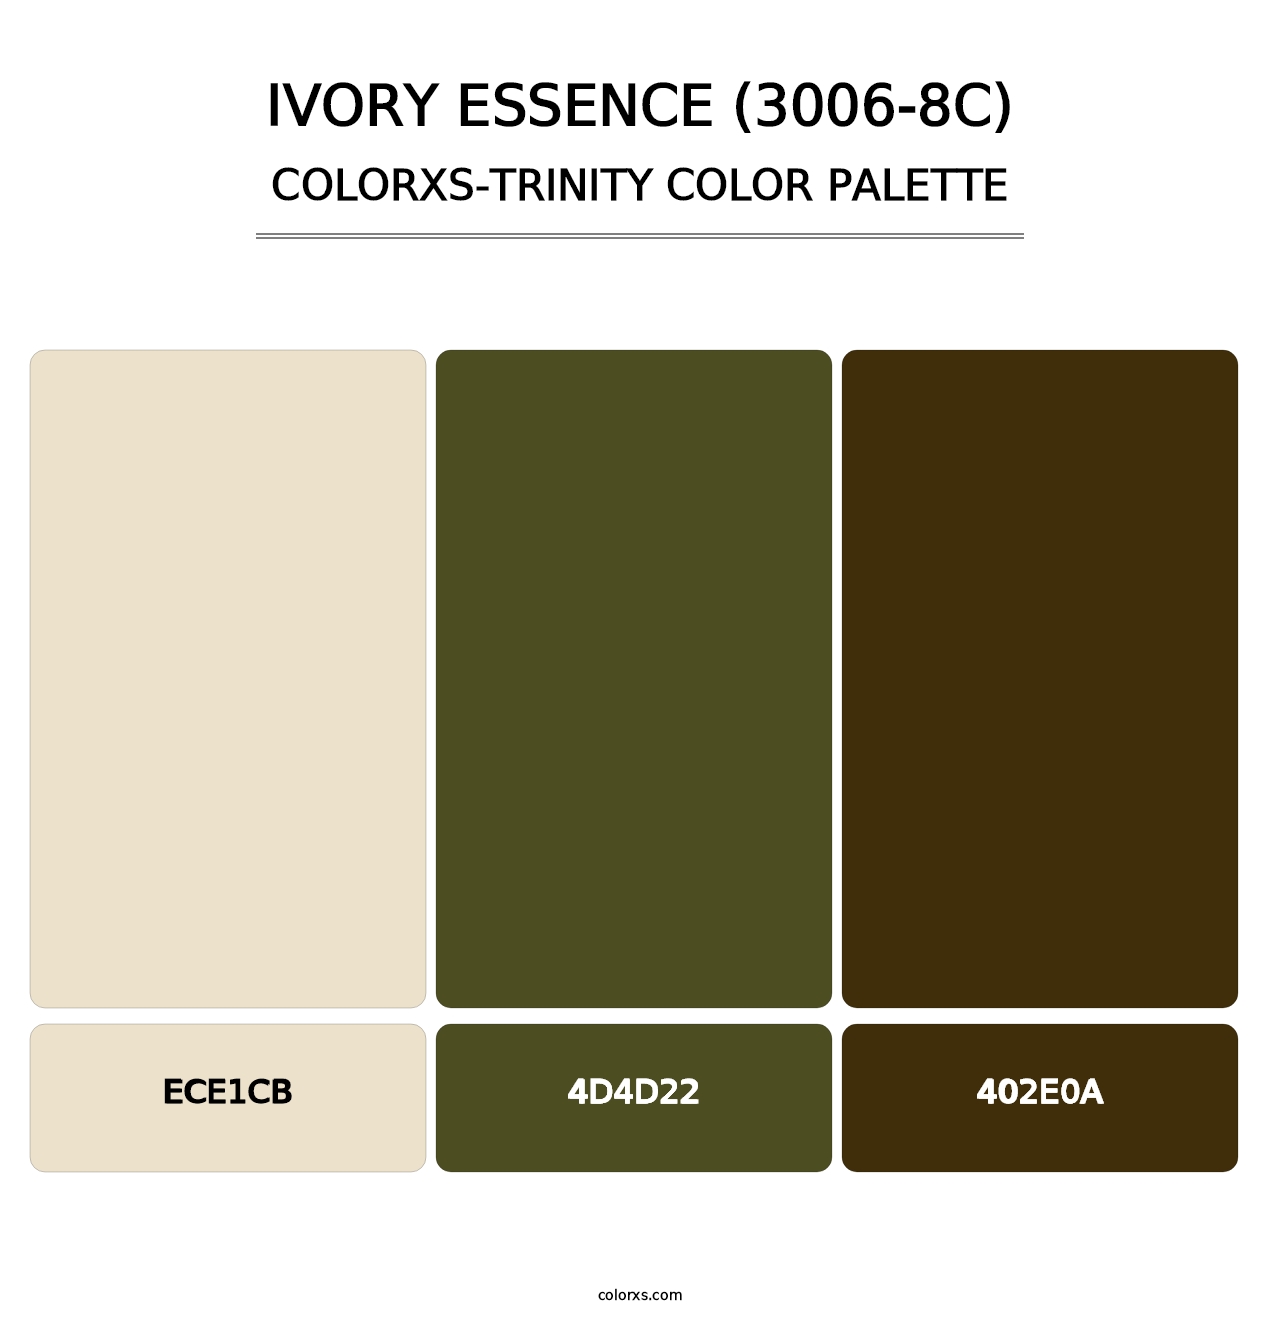 Ivory Essence (3006-8C) - Colorxs Trinity Palette